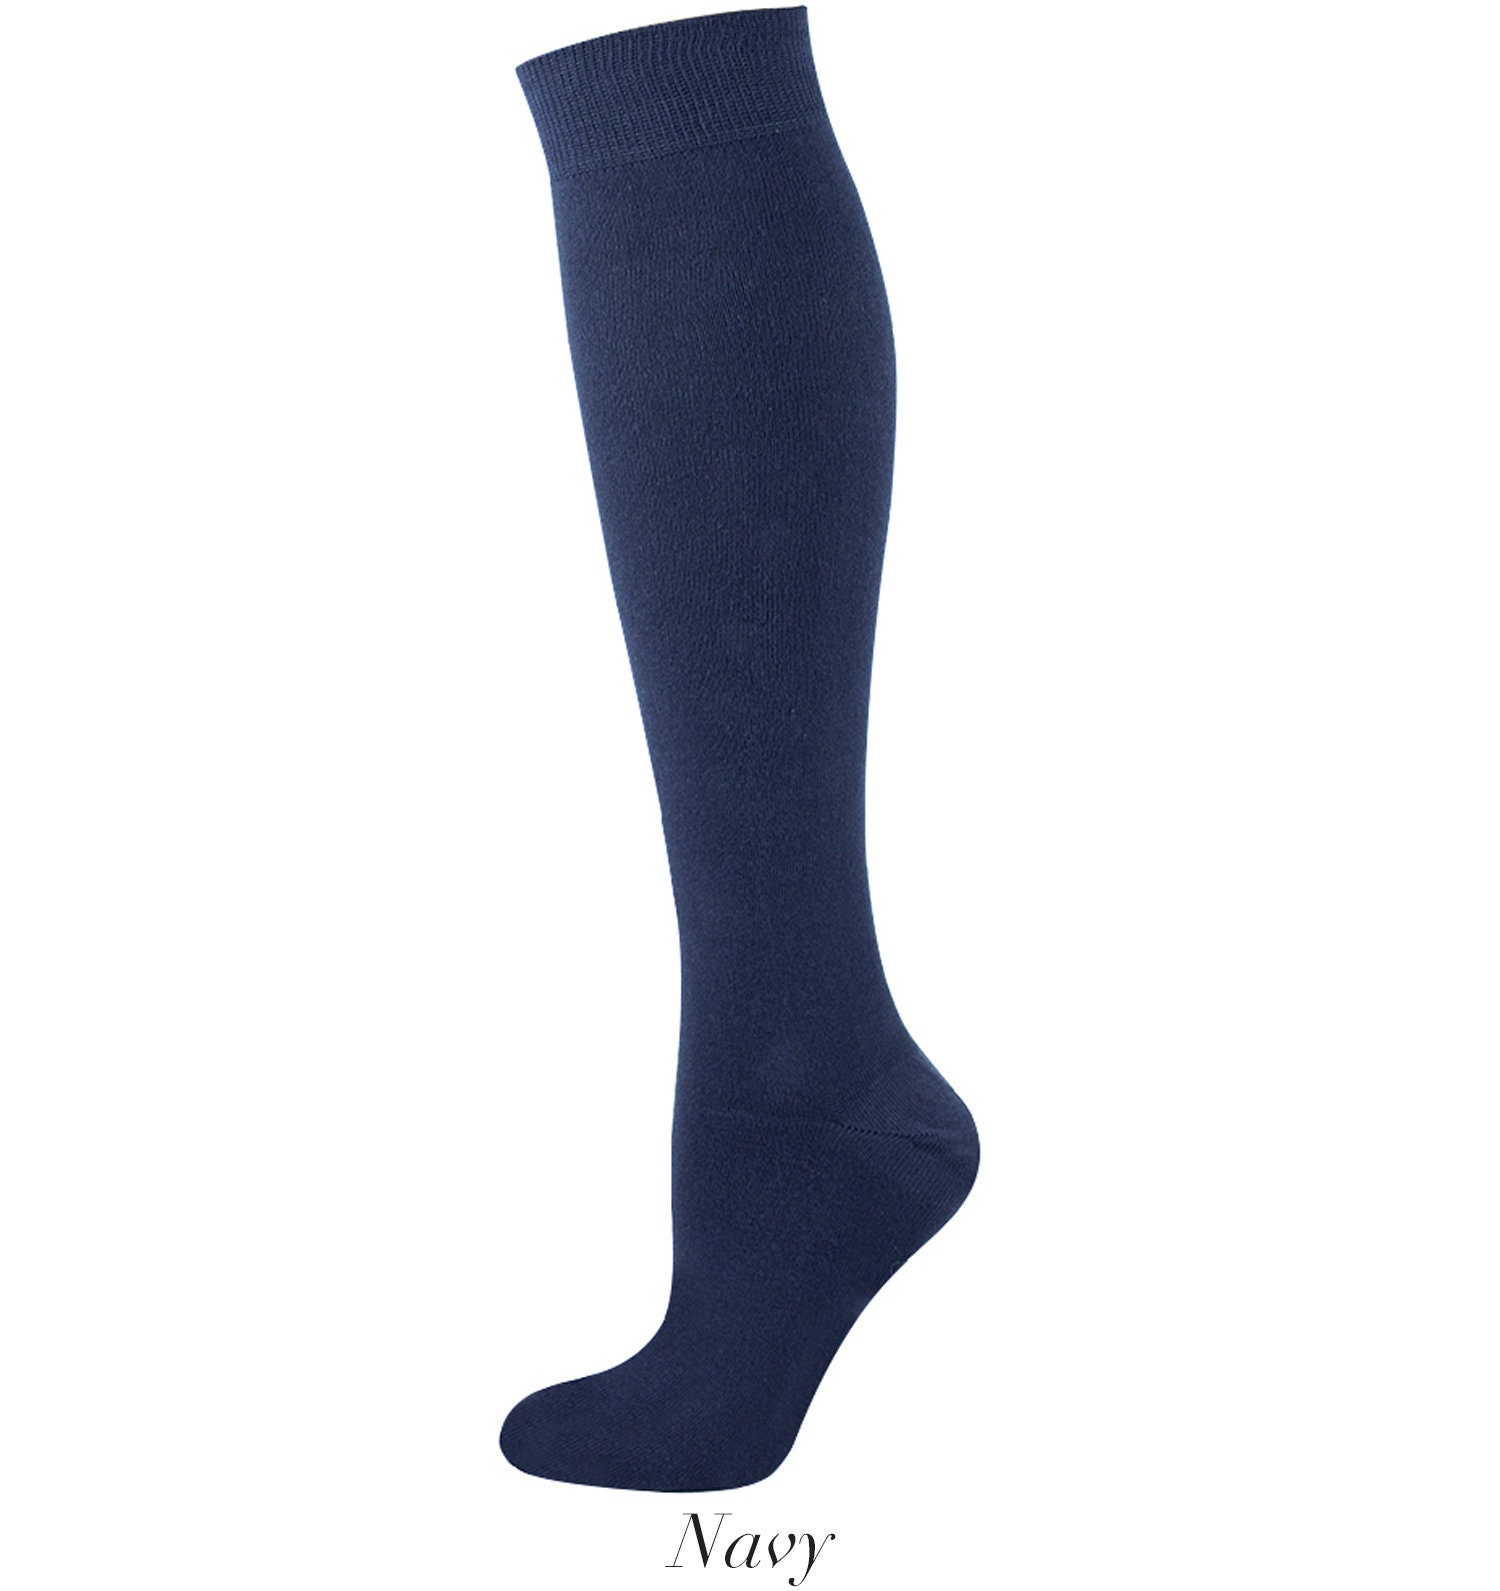 Mysocks Knee High Plain Socks Dark Colour | Etsy